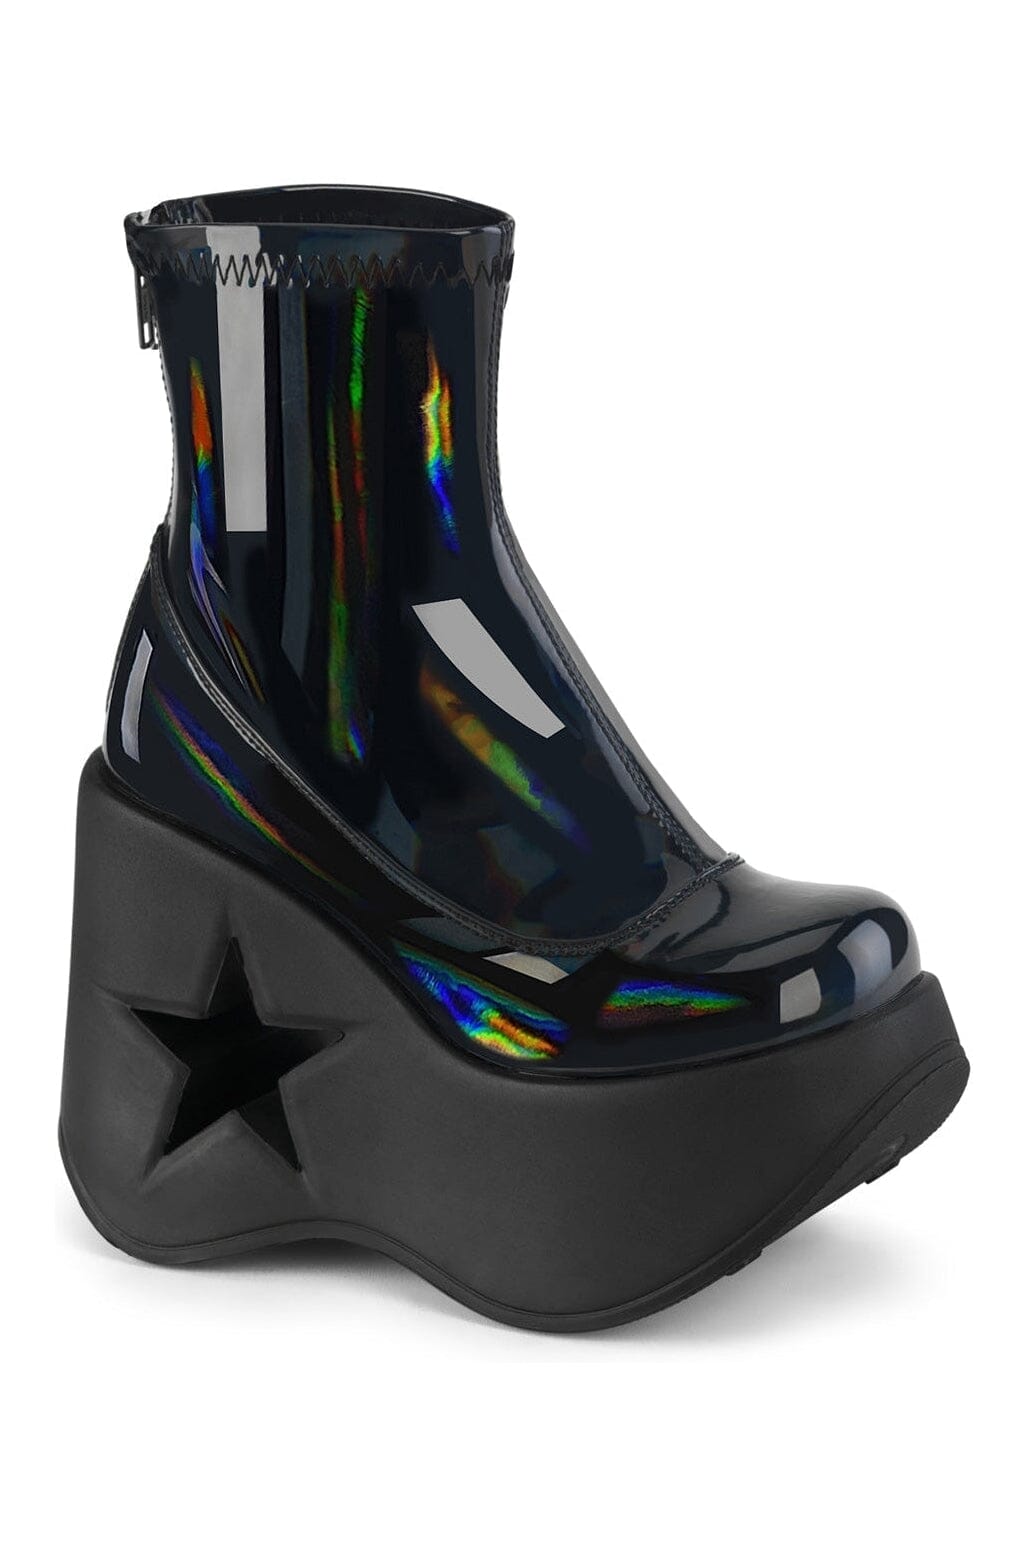 DYNAMITE-100 Black Hologram Patent Ankle Boot-Ankle Boots-Demonia-Black-10-Hologram Patent-SEXYSHOES.COM